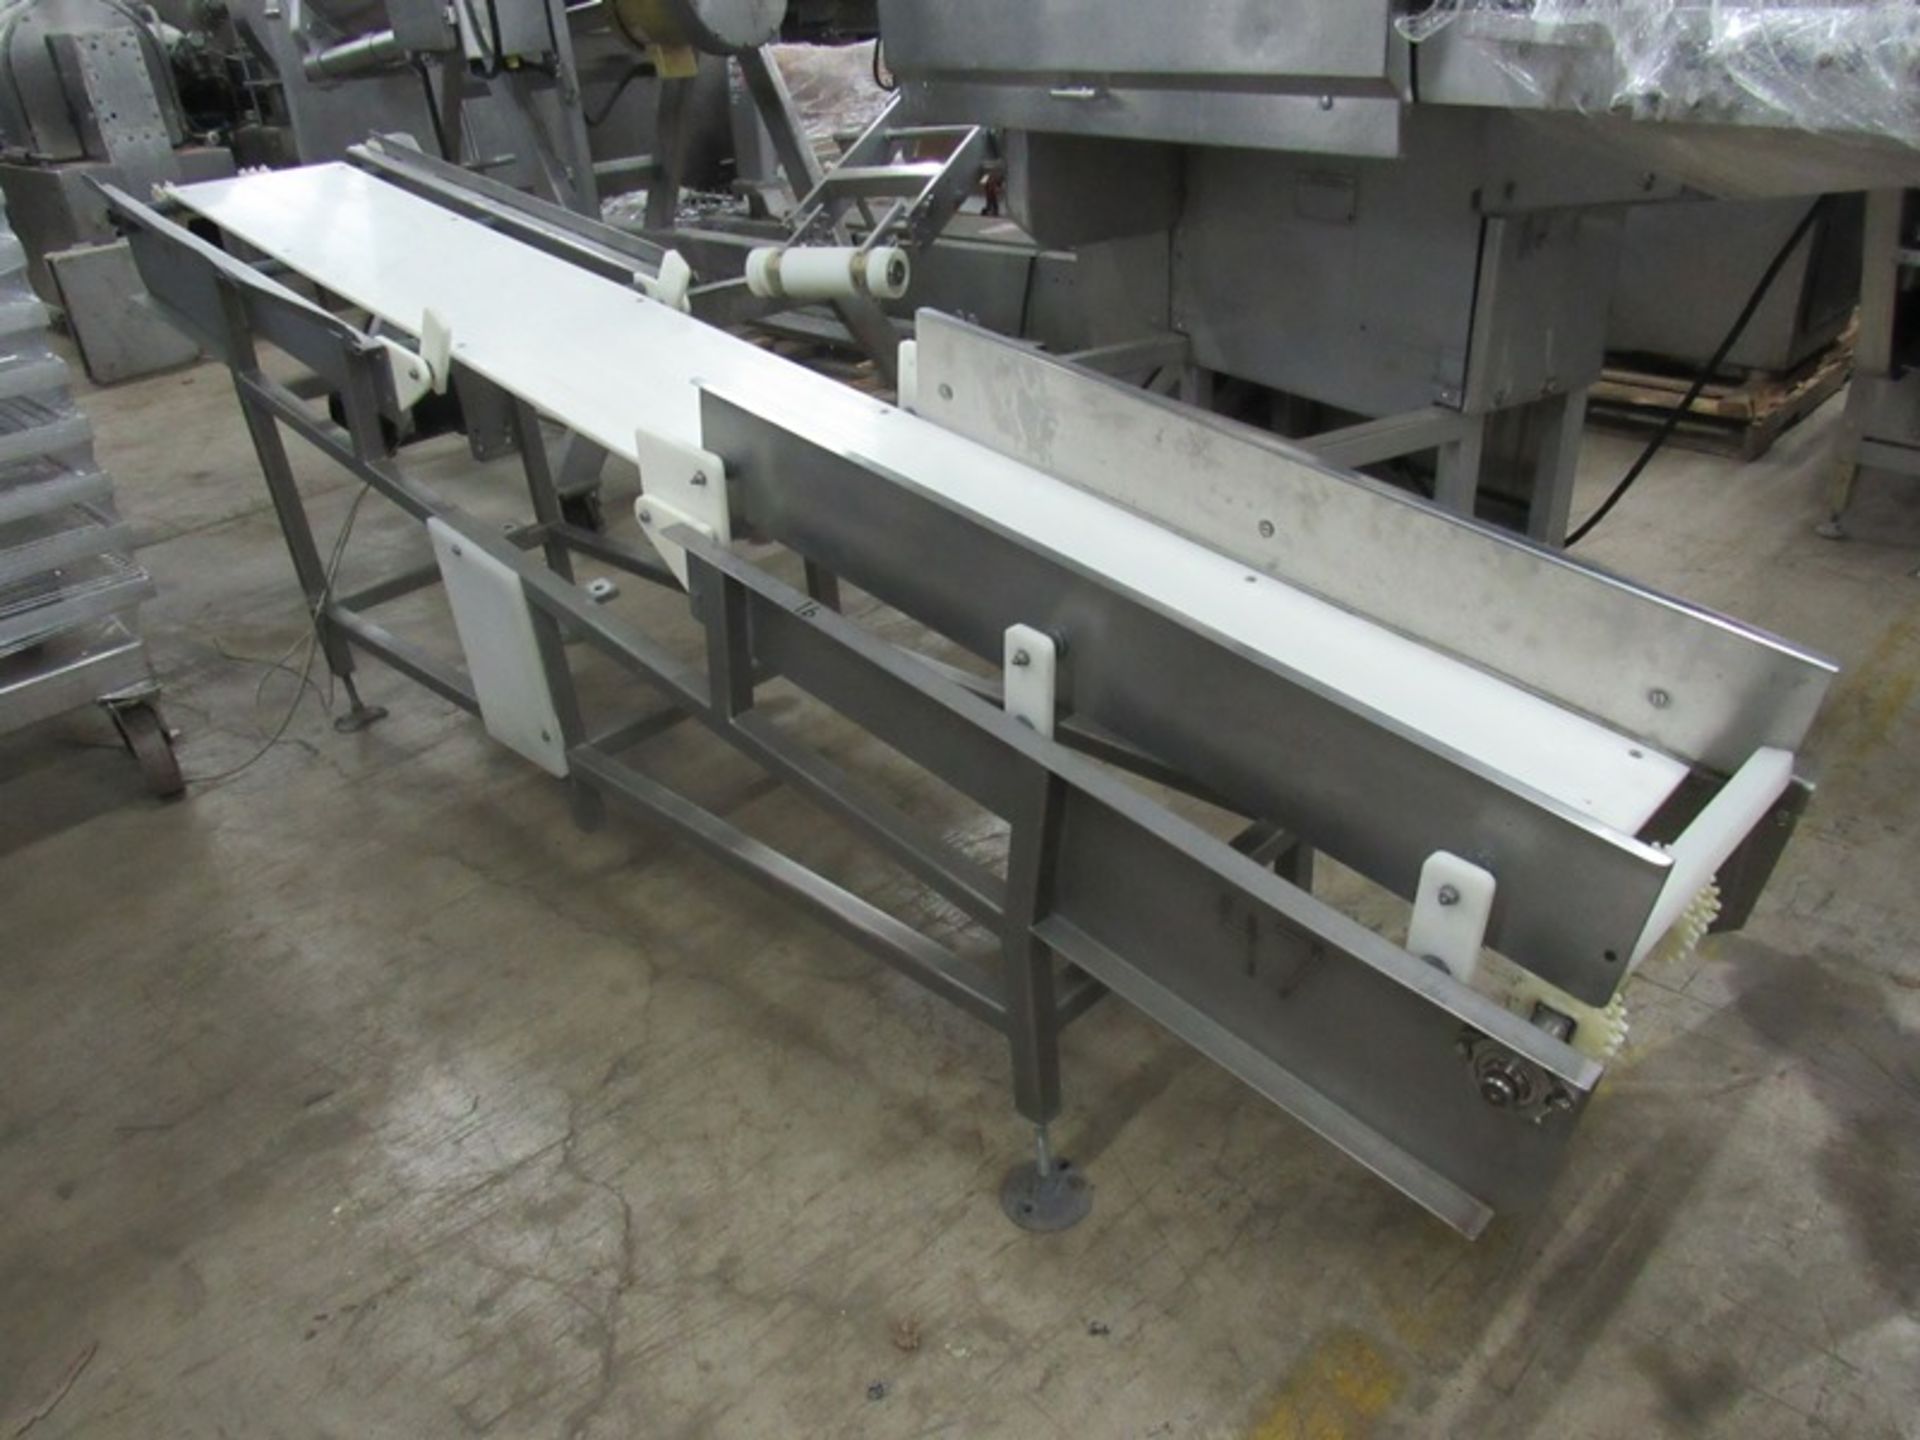 Incline Conveyor, 12" W X 113" L (no belt) Located in Sandwich, IL